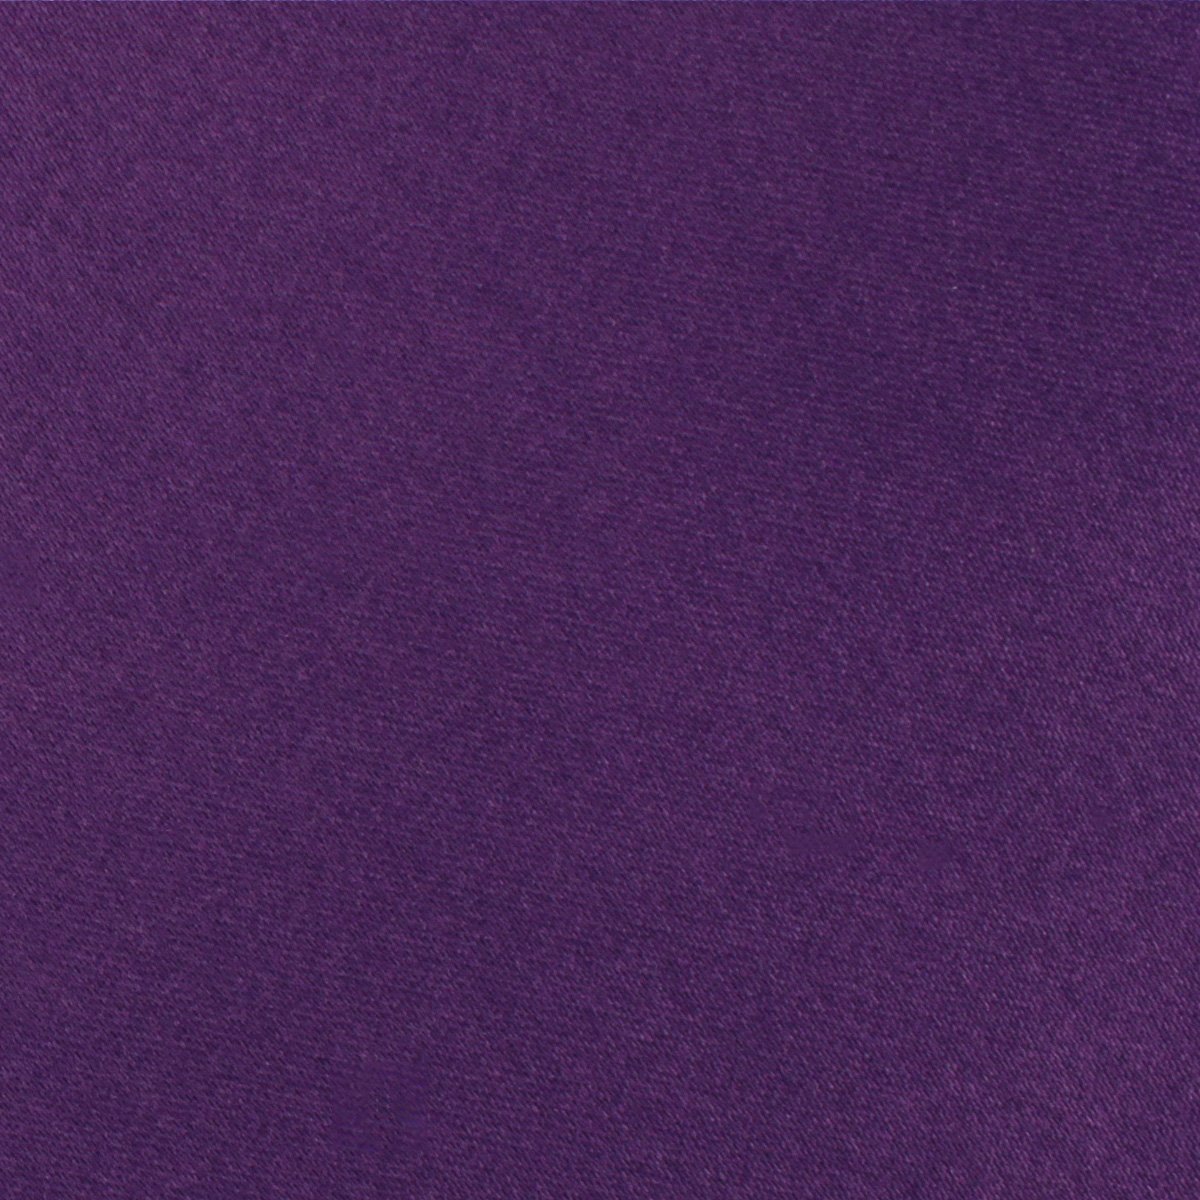 Eggplant Purple Satin Fabric Swatch